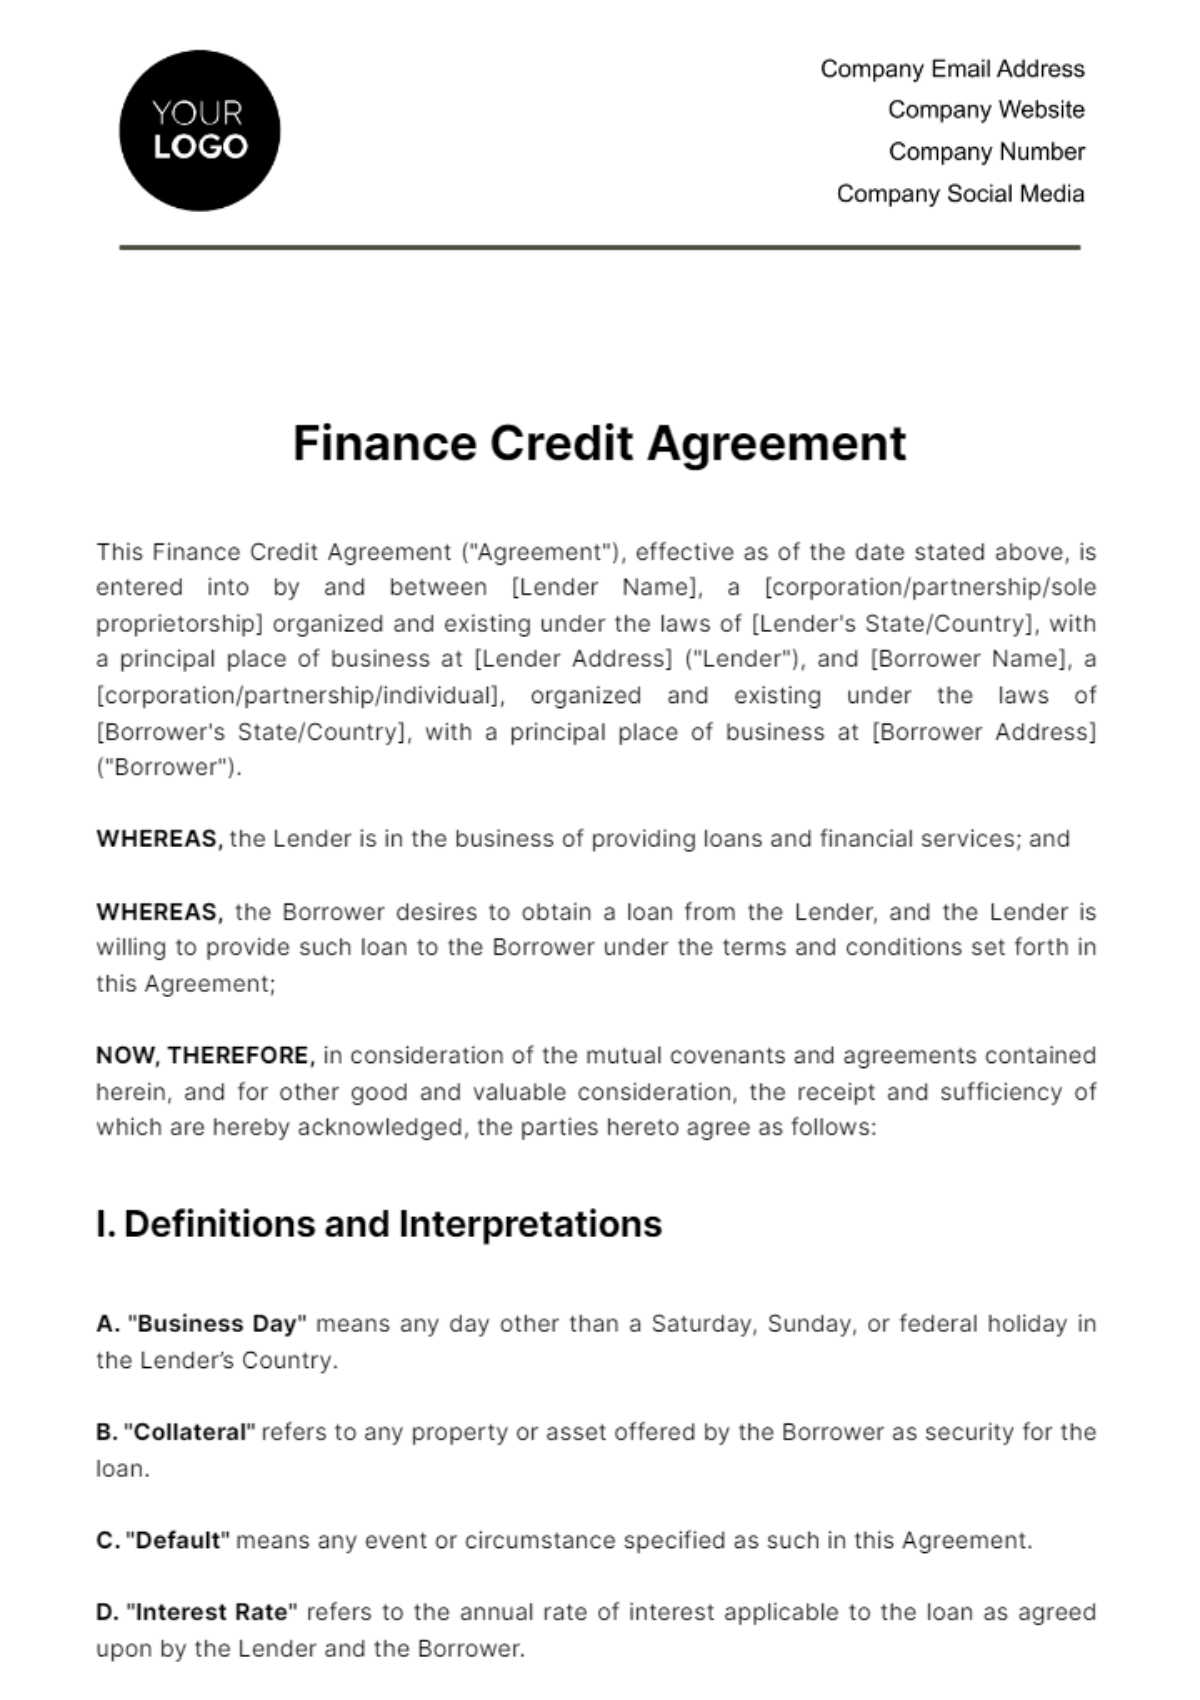 Finance Credit Agreement Template